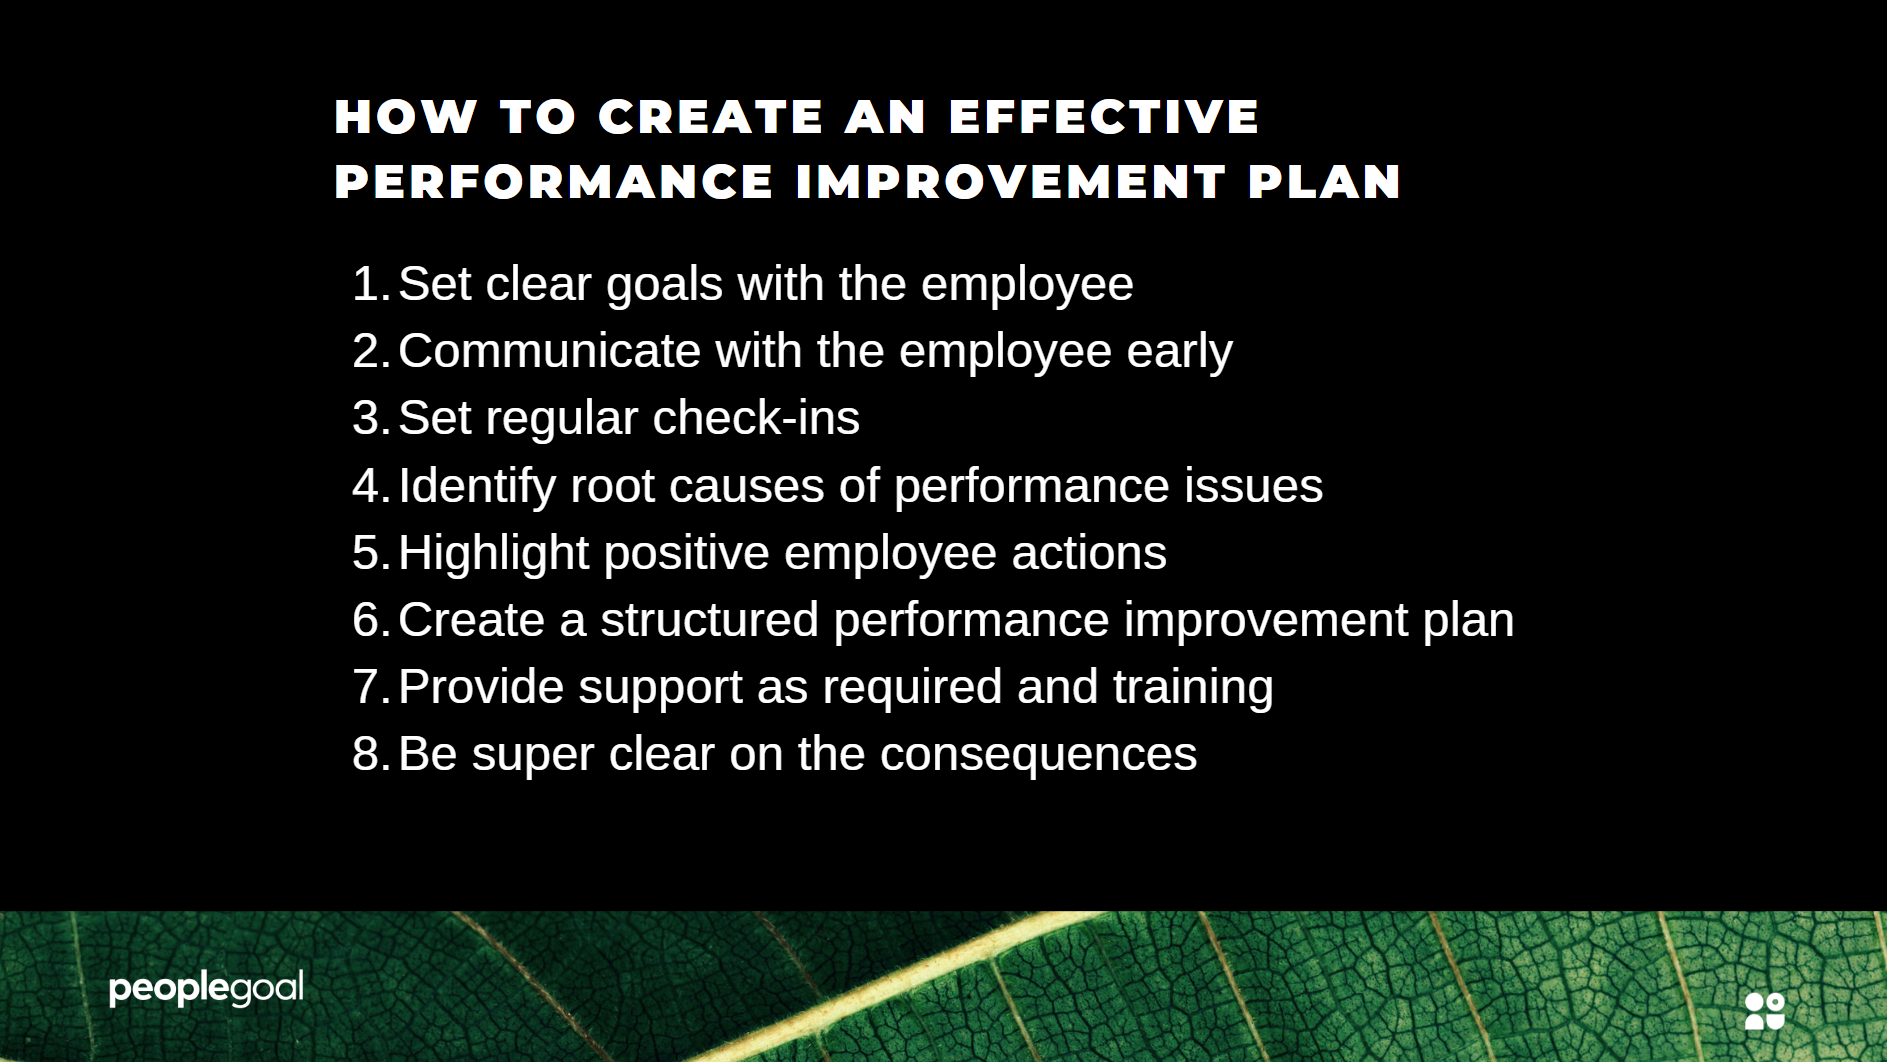 Performance Improvement Plan Effectiveness